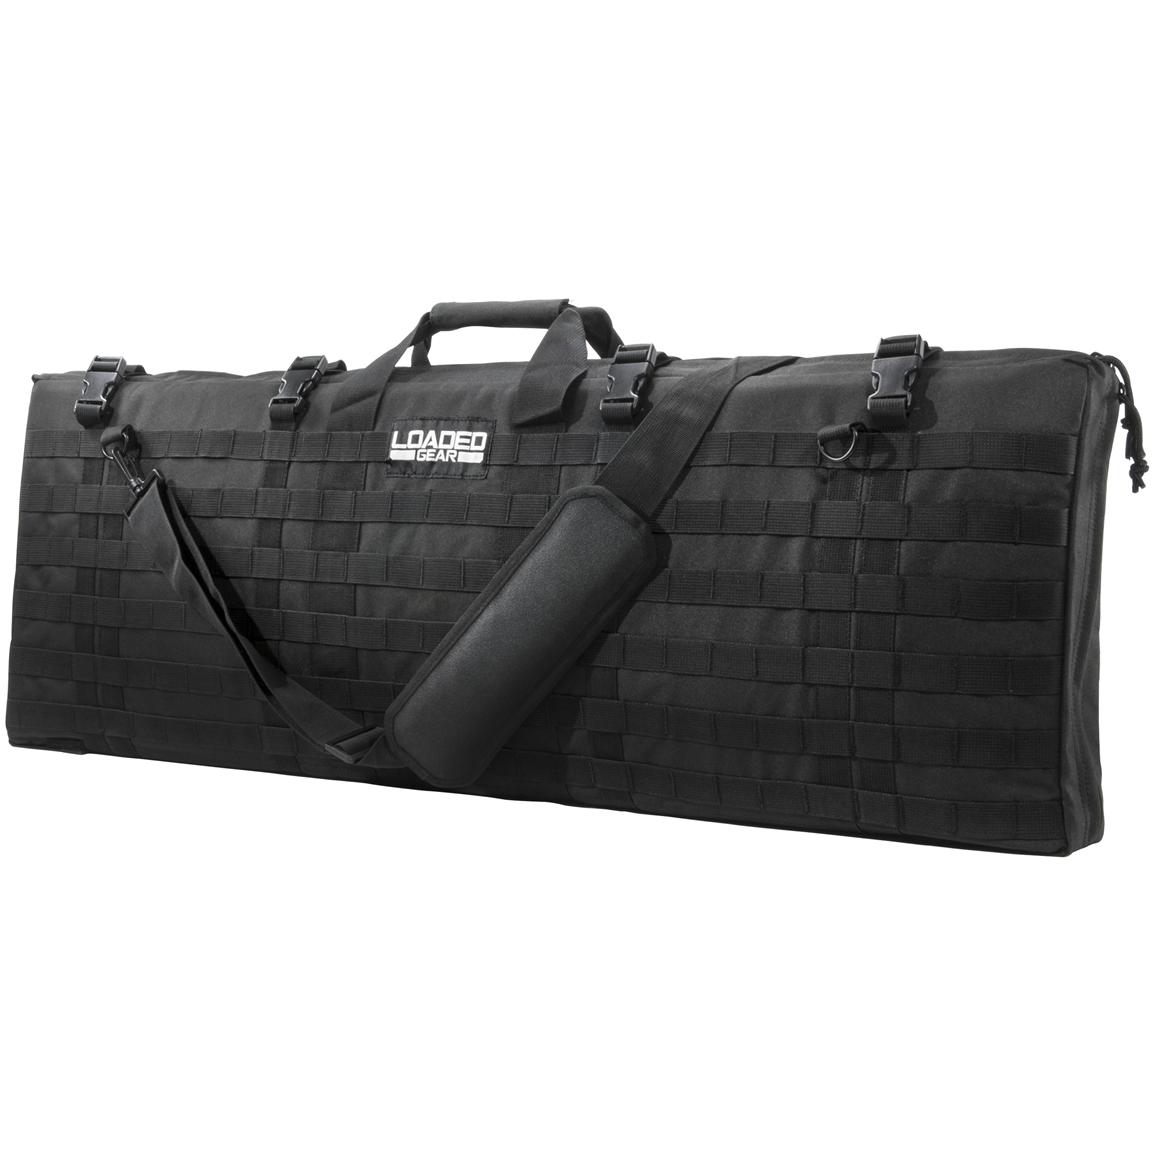 Barska Loaded Gear RX-300 Tactical Rifle Bag Case - 579619, Gun Cases ...